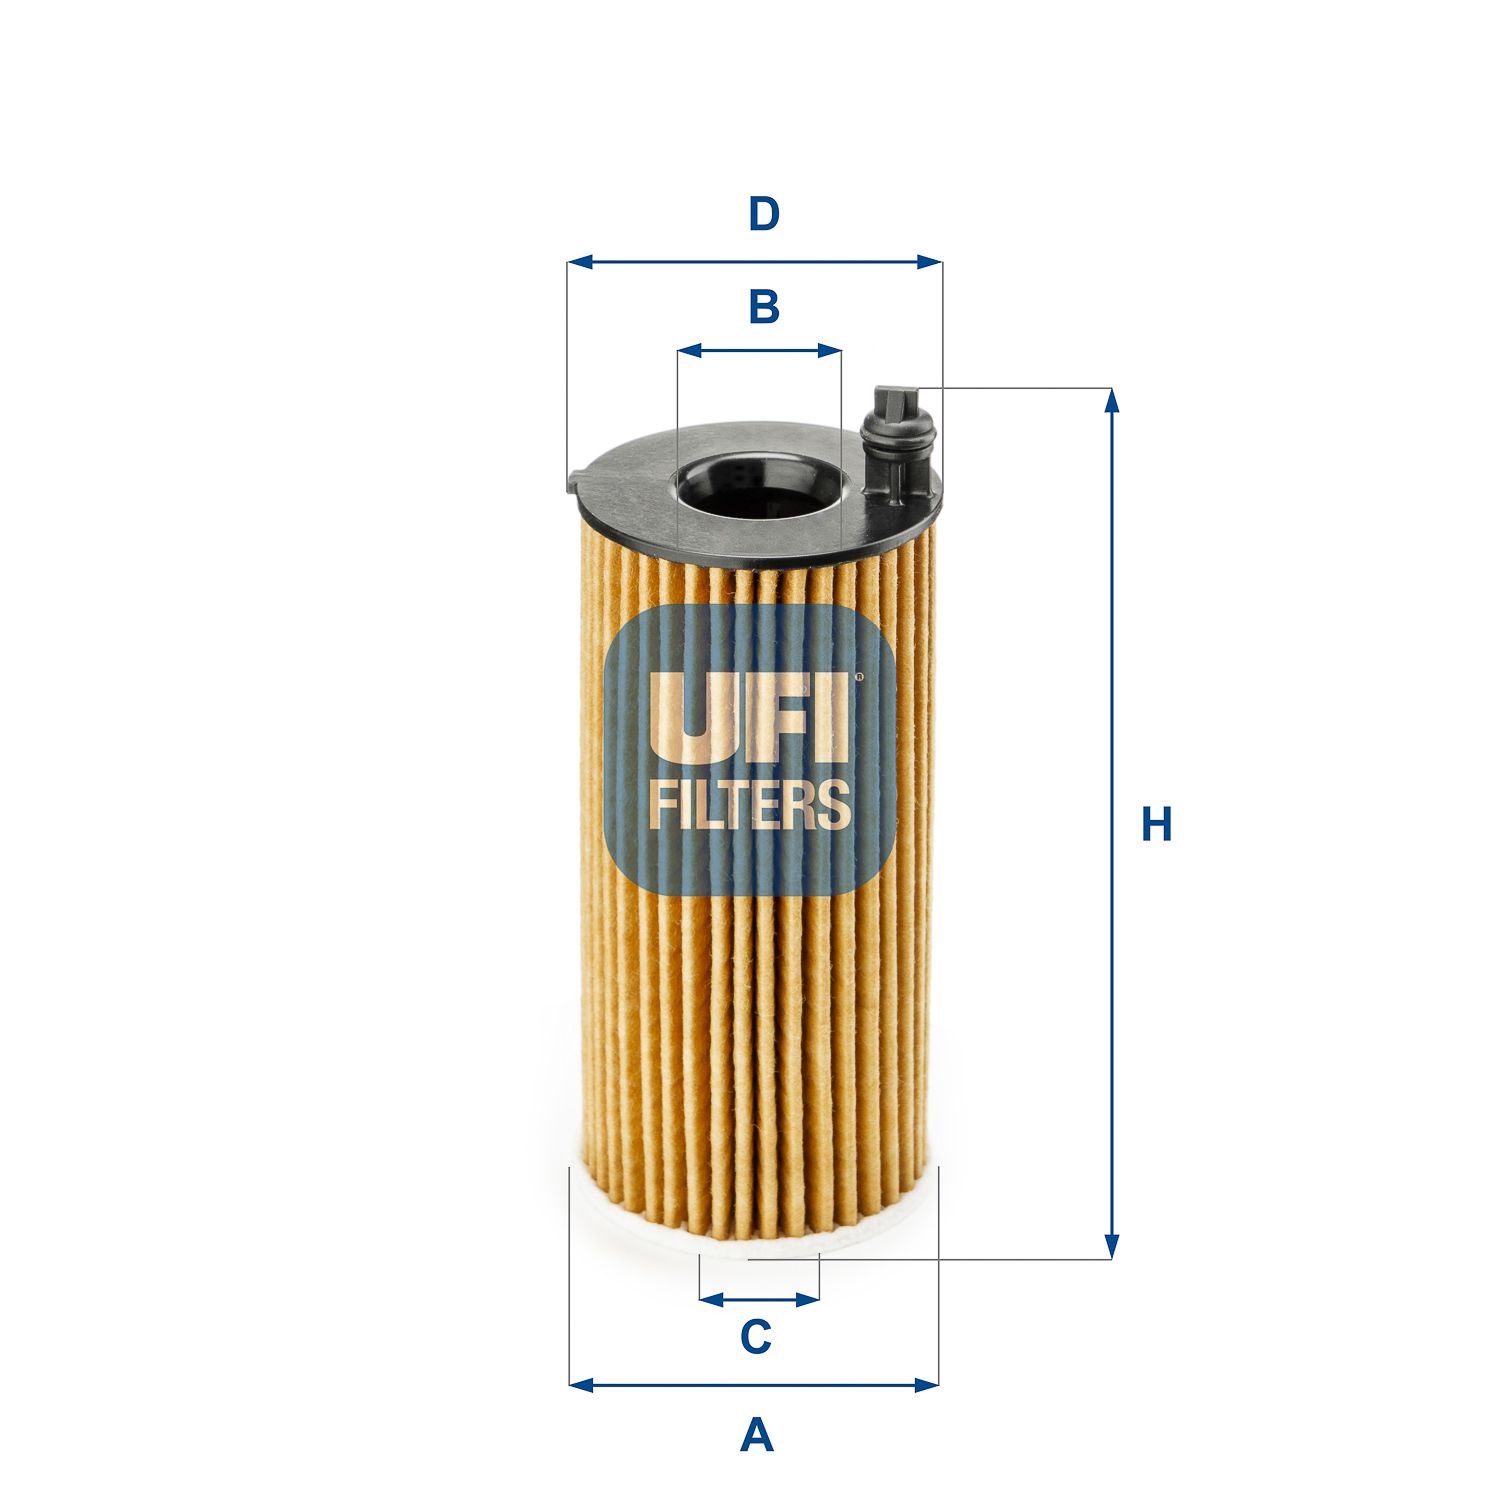 Olejový filtr UFI 25.188.00